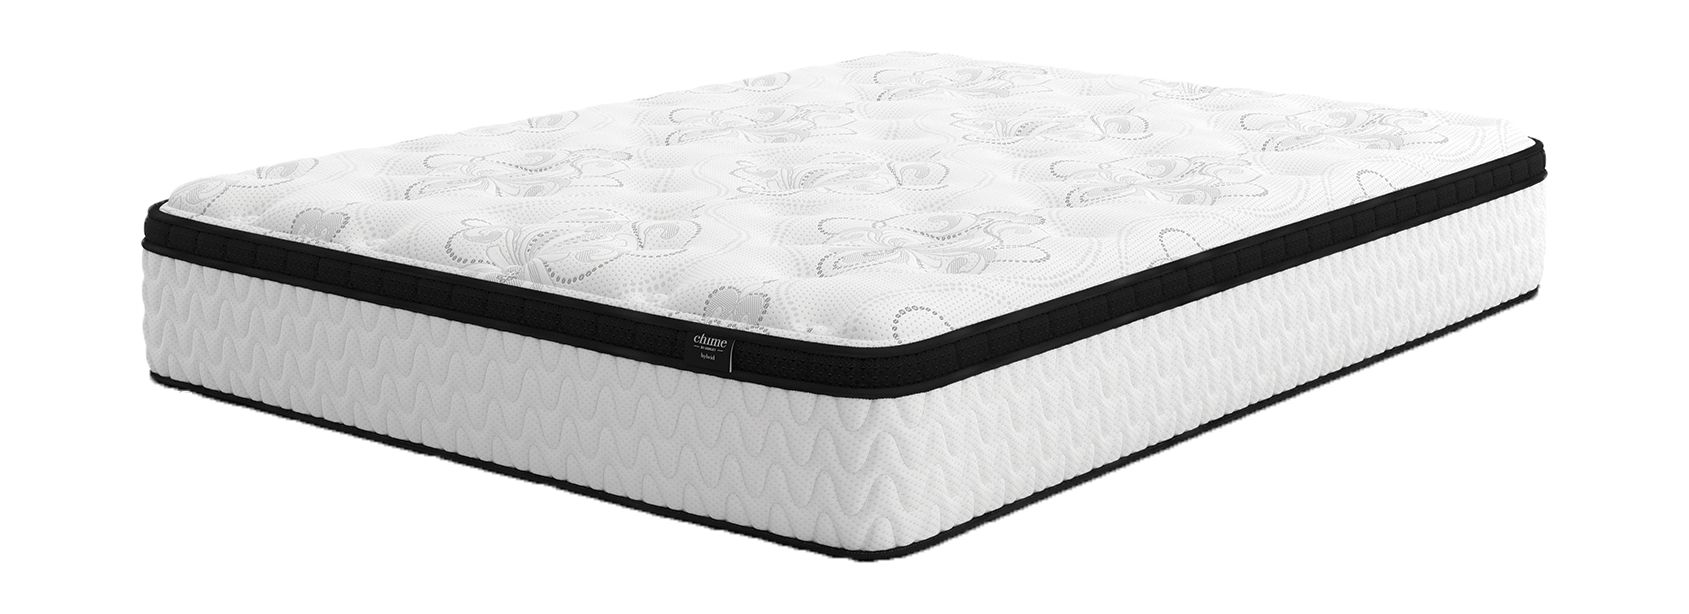 chime 12 inch hybrid queen mattress